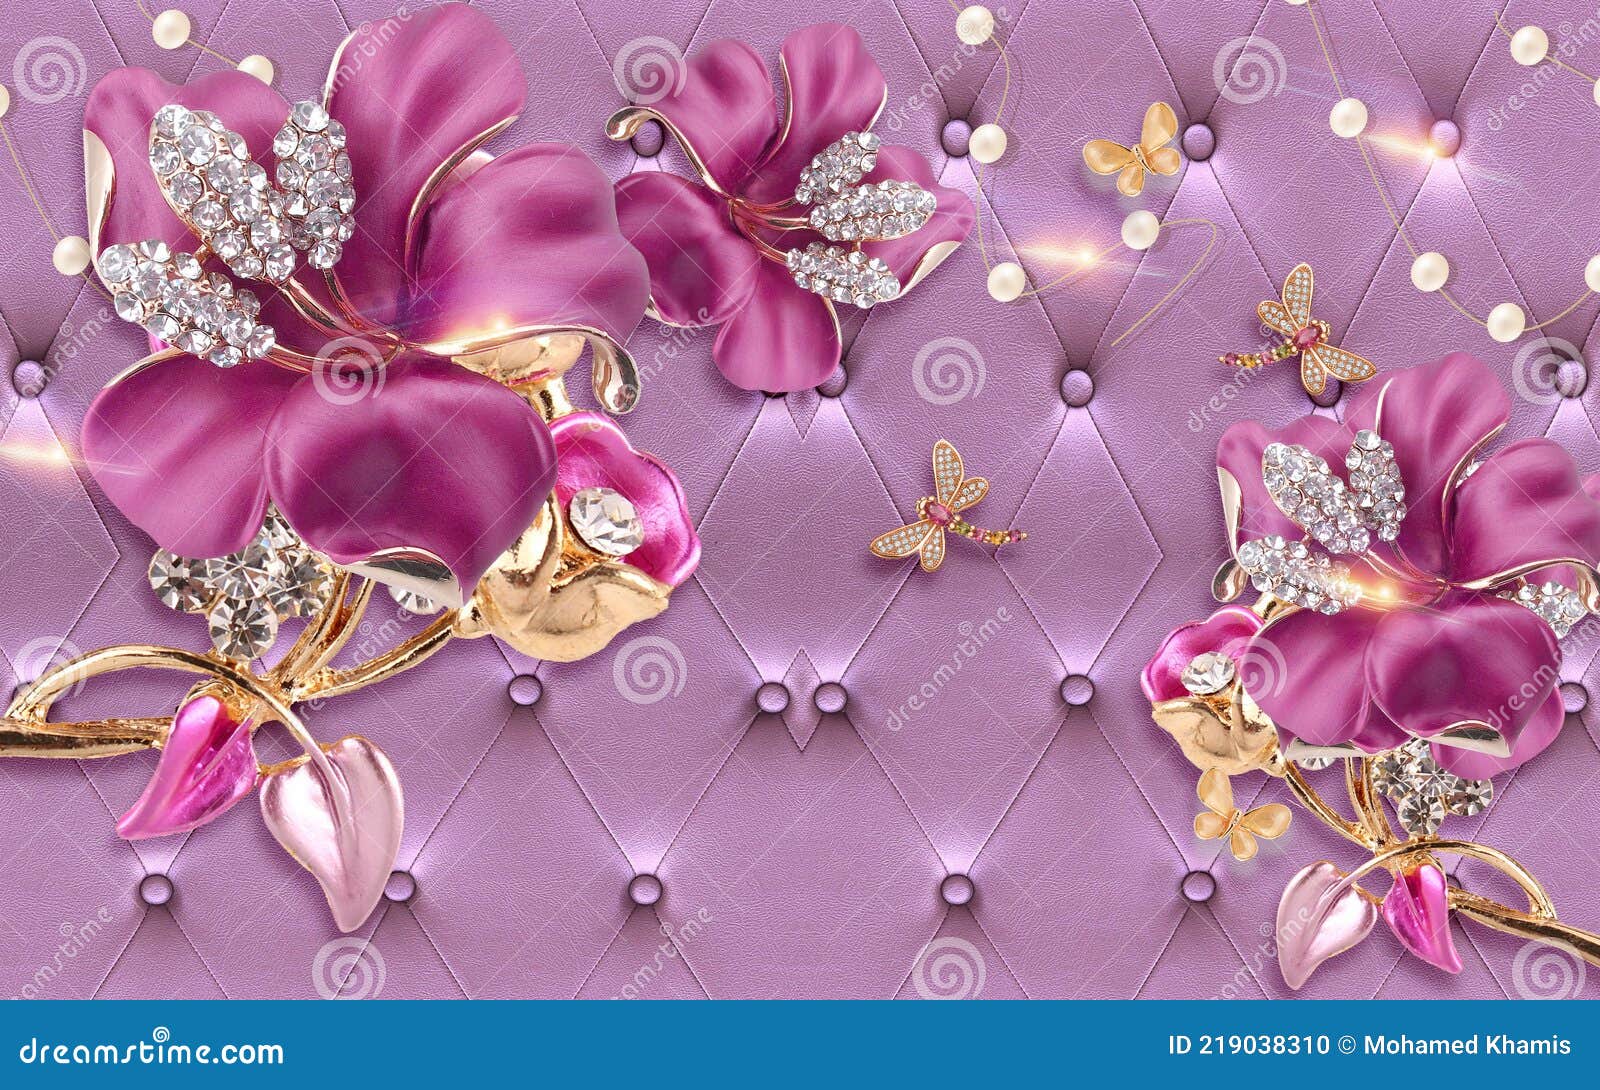 Premium Photo | Shiny gemstones diamonds crystals abstract background  beautiful luxury wallpaper 3d illustration